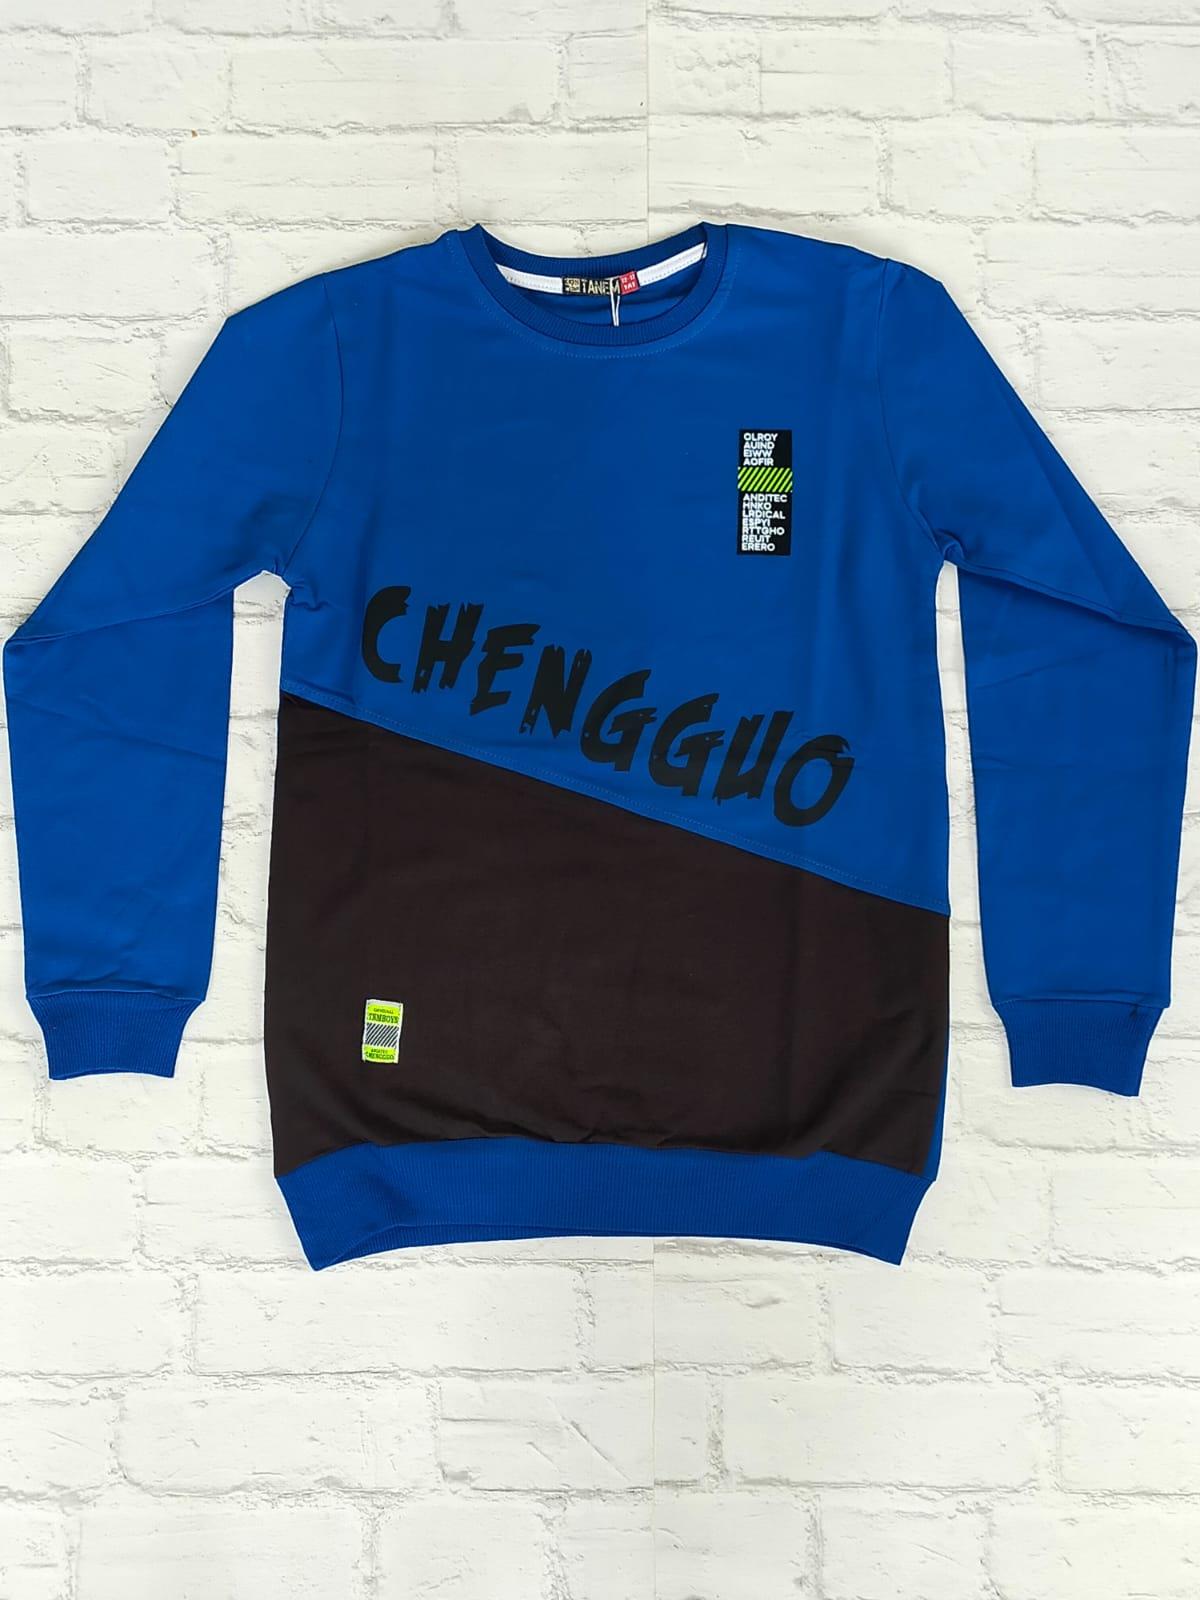 Chengguo Yazılı Erkek Sweatshirt - mavi | moda-s.com